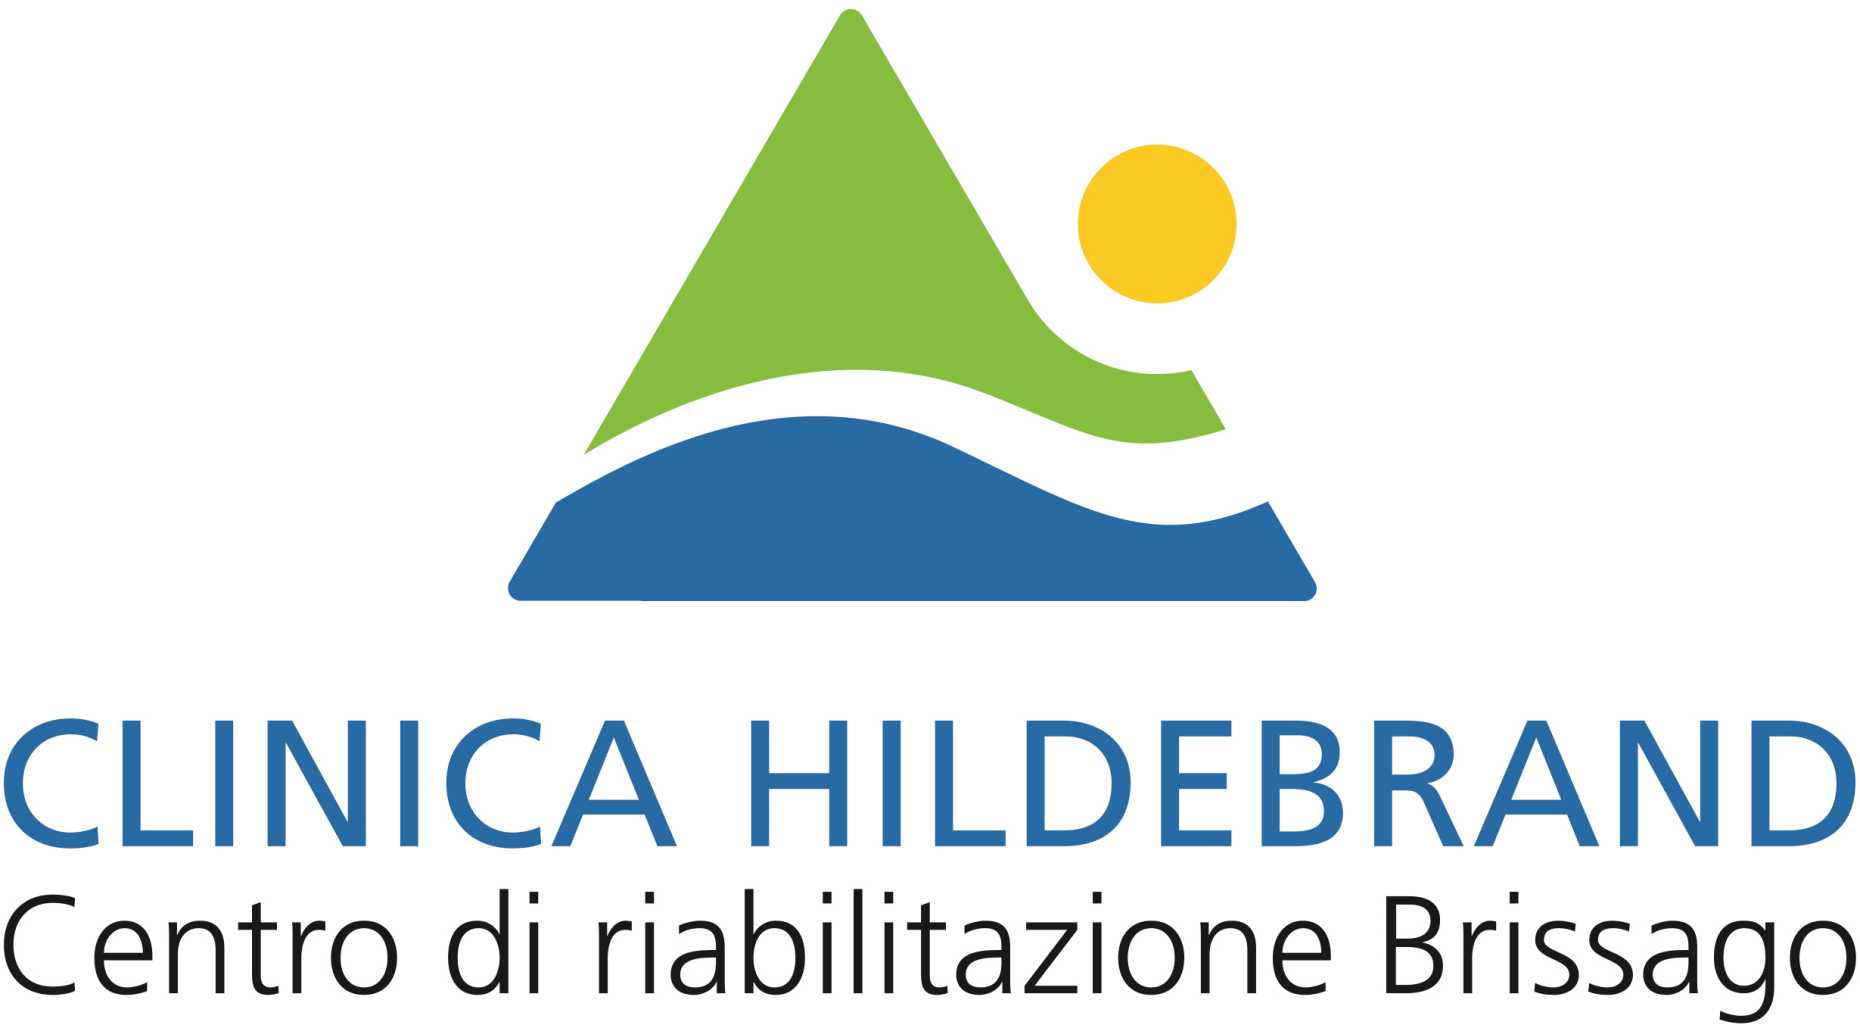 Clinica Hildebrand Centro di riabilitazione Brissago Logo